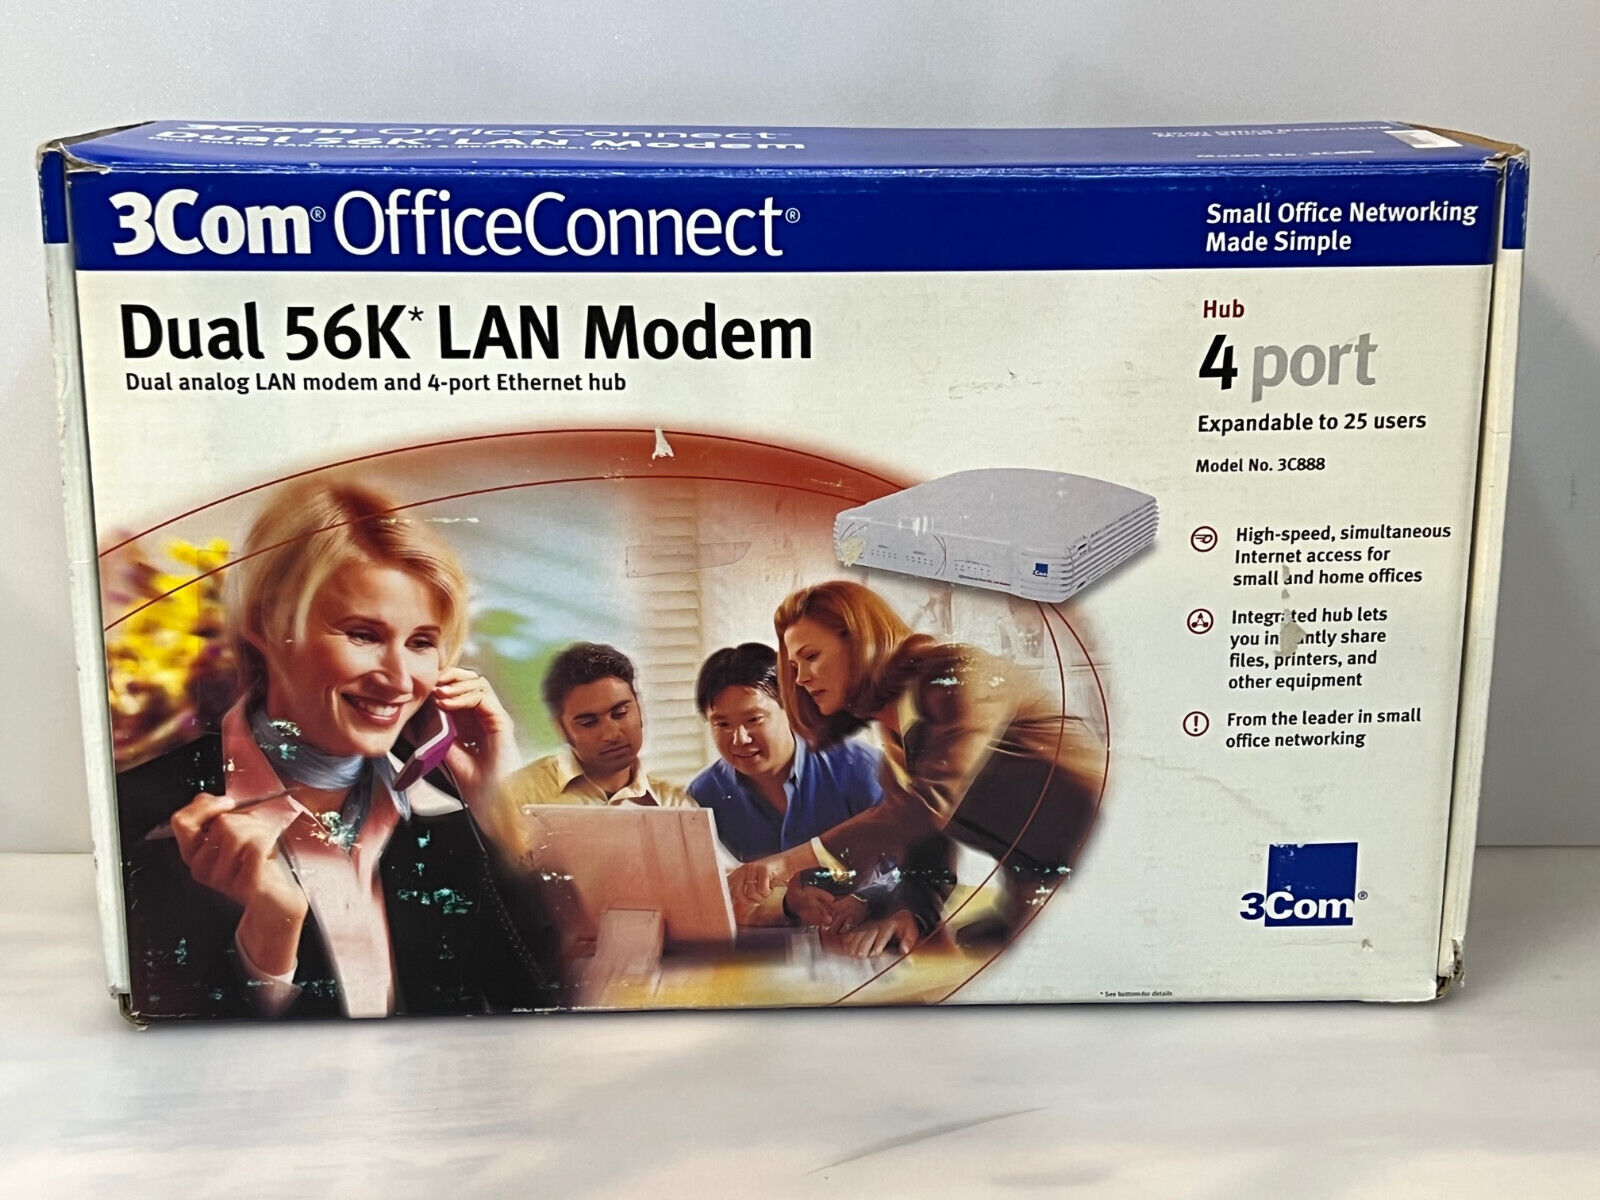 Refurbished 3Com 3C888 OfficeConnect Dual 56k Plus LAN Modem 